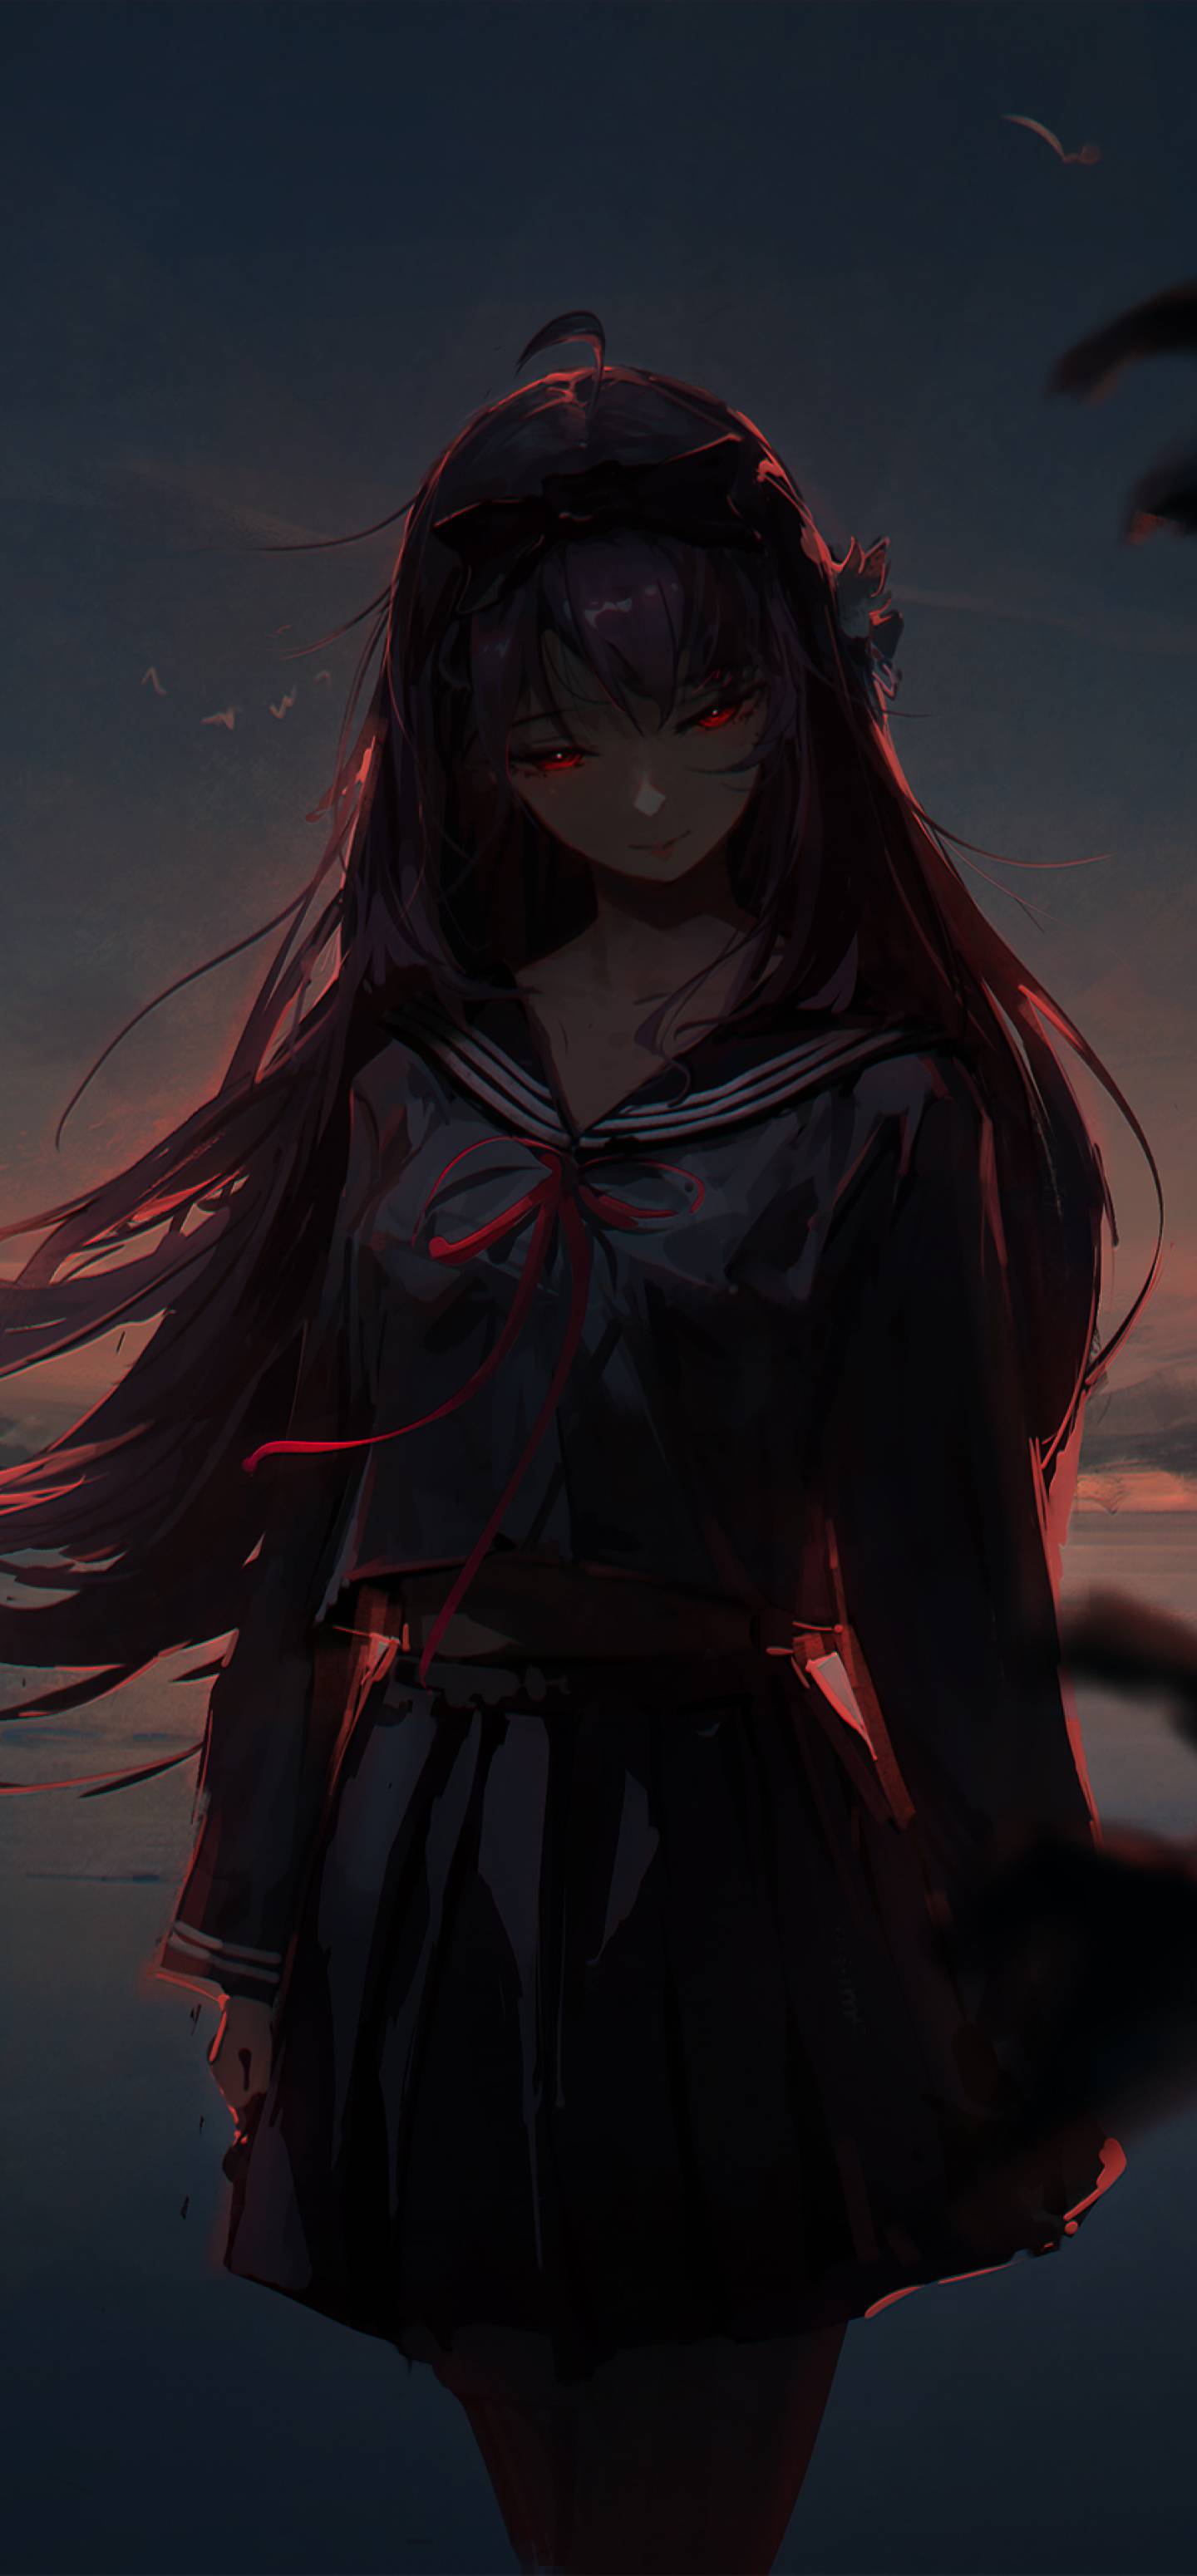 Anime Evil Girl Art 1440x3100 Resolution Wallpaper, HD Artist 4K Wallpaper, Image, Photo and Background